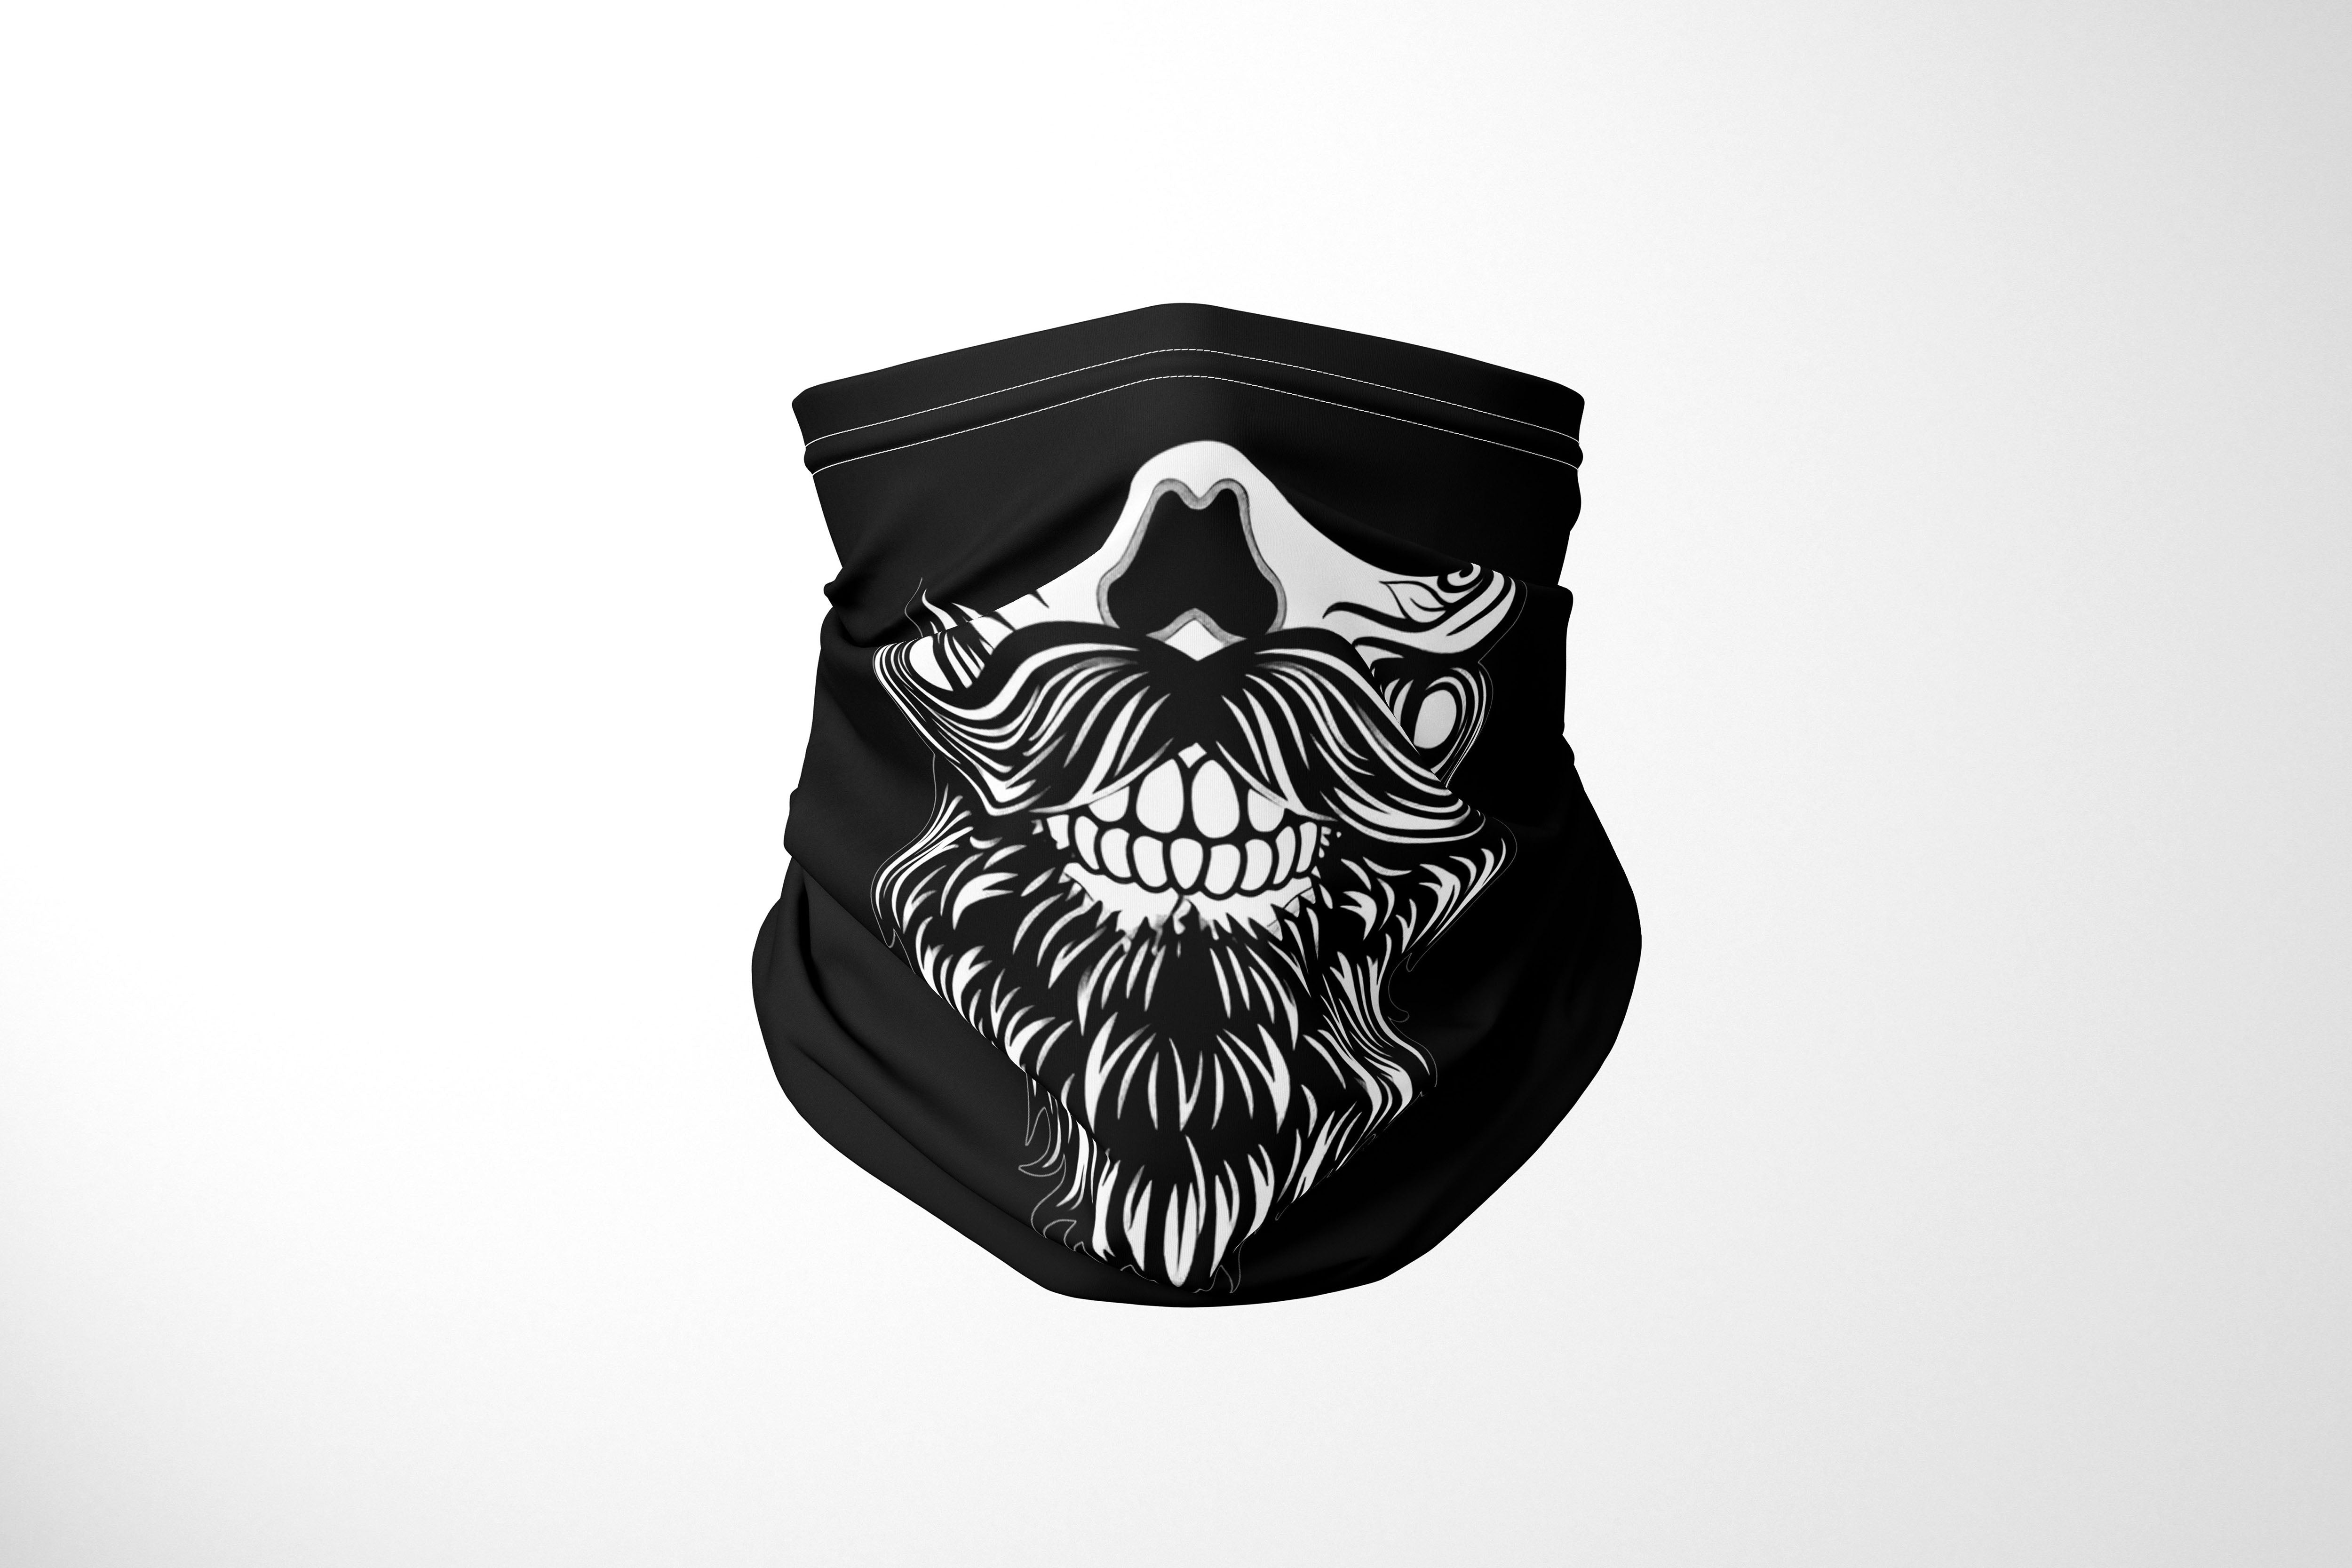 Skull beard multifunctional bandana